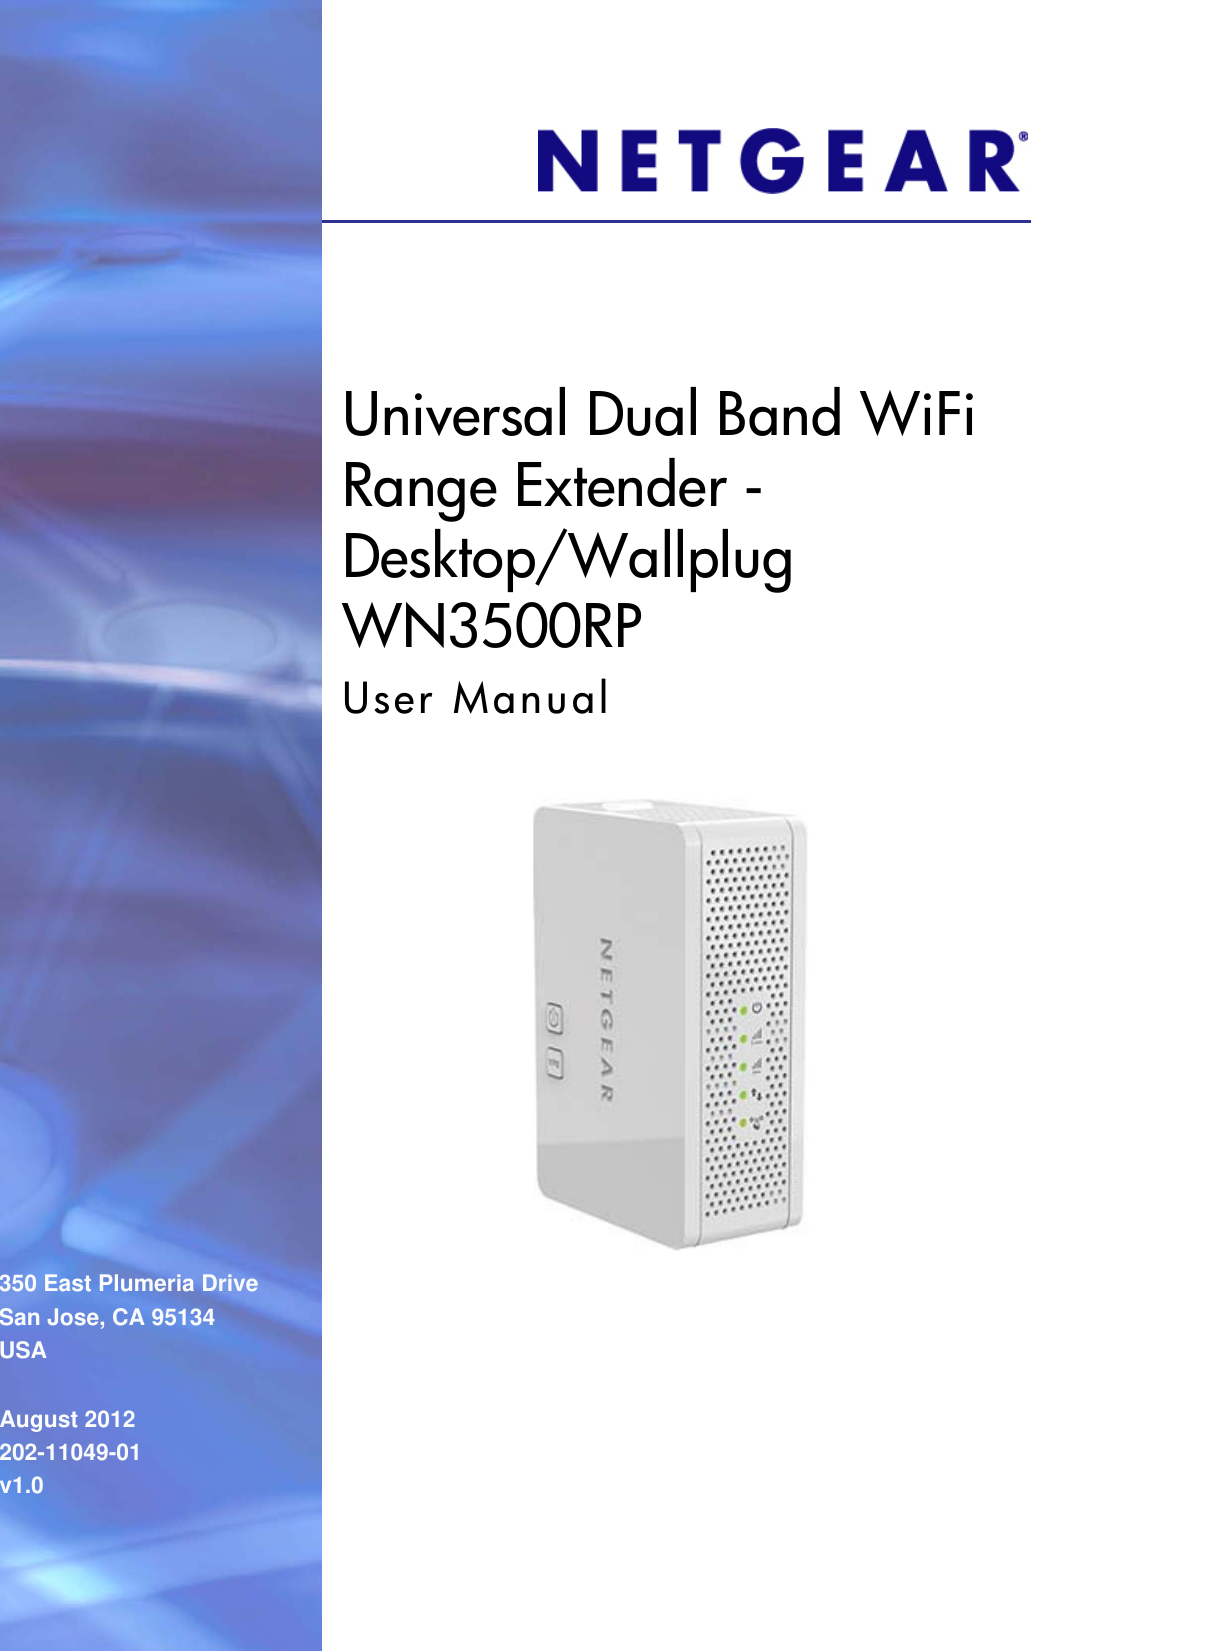 350 East Plumeria DriveSan Jose, CA 95134USAAugust 2012202-11049-01v1.0Universal Dual Band WiFi Range Extender - Desktop/Wallplug WN3500RPUser Manual